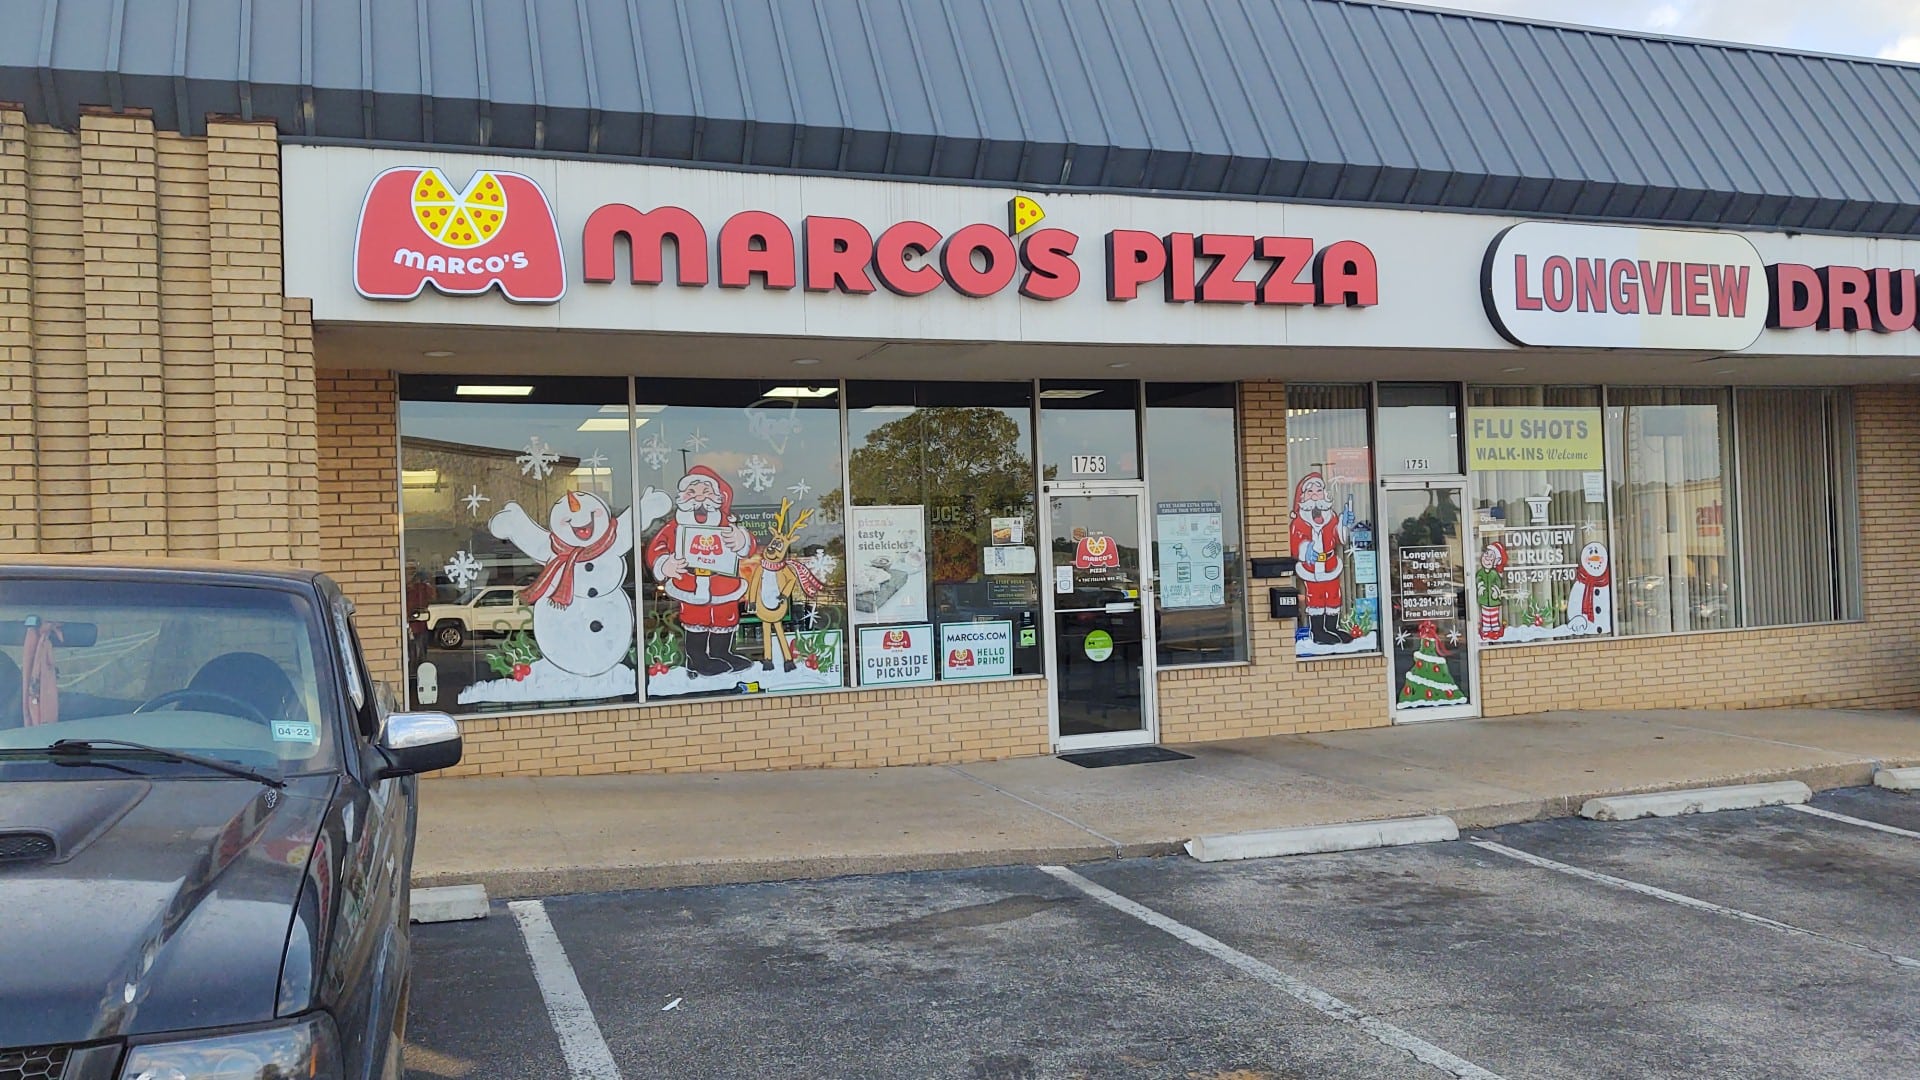 Marco's Pizza - Longview (TX 75604), US, best pizza near me